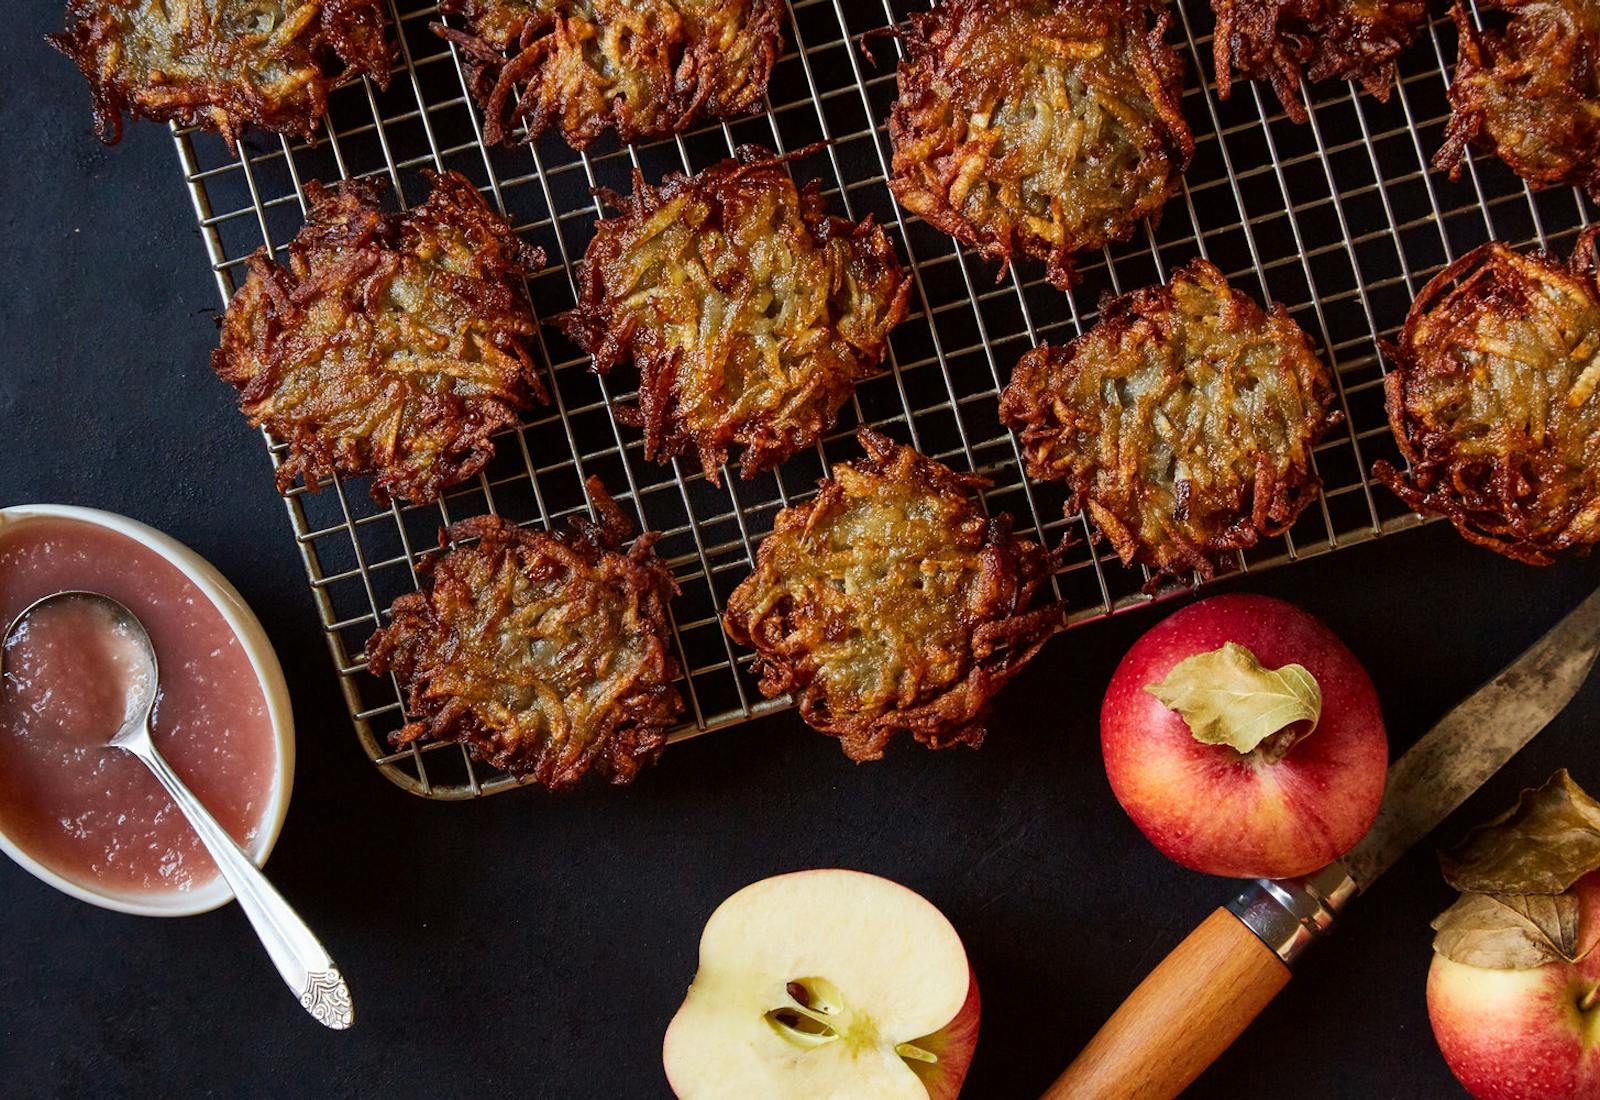 Latkes on wire baking rack alongside apple sauce and fresh apples atop black surface.